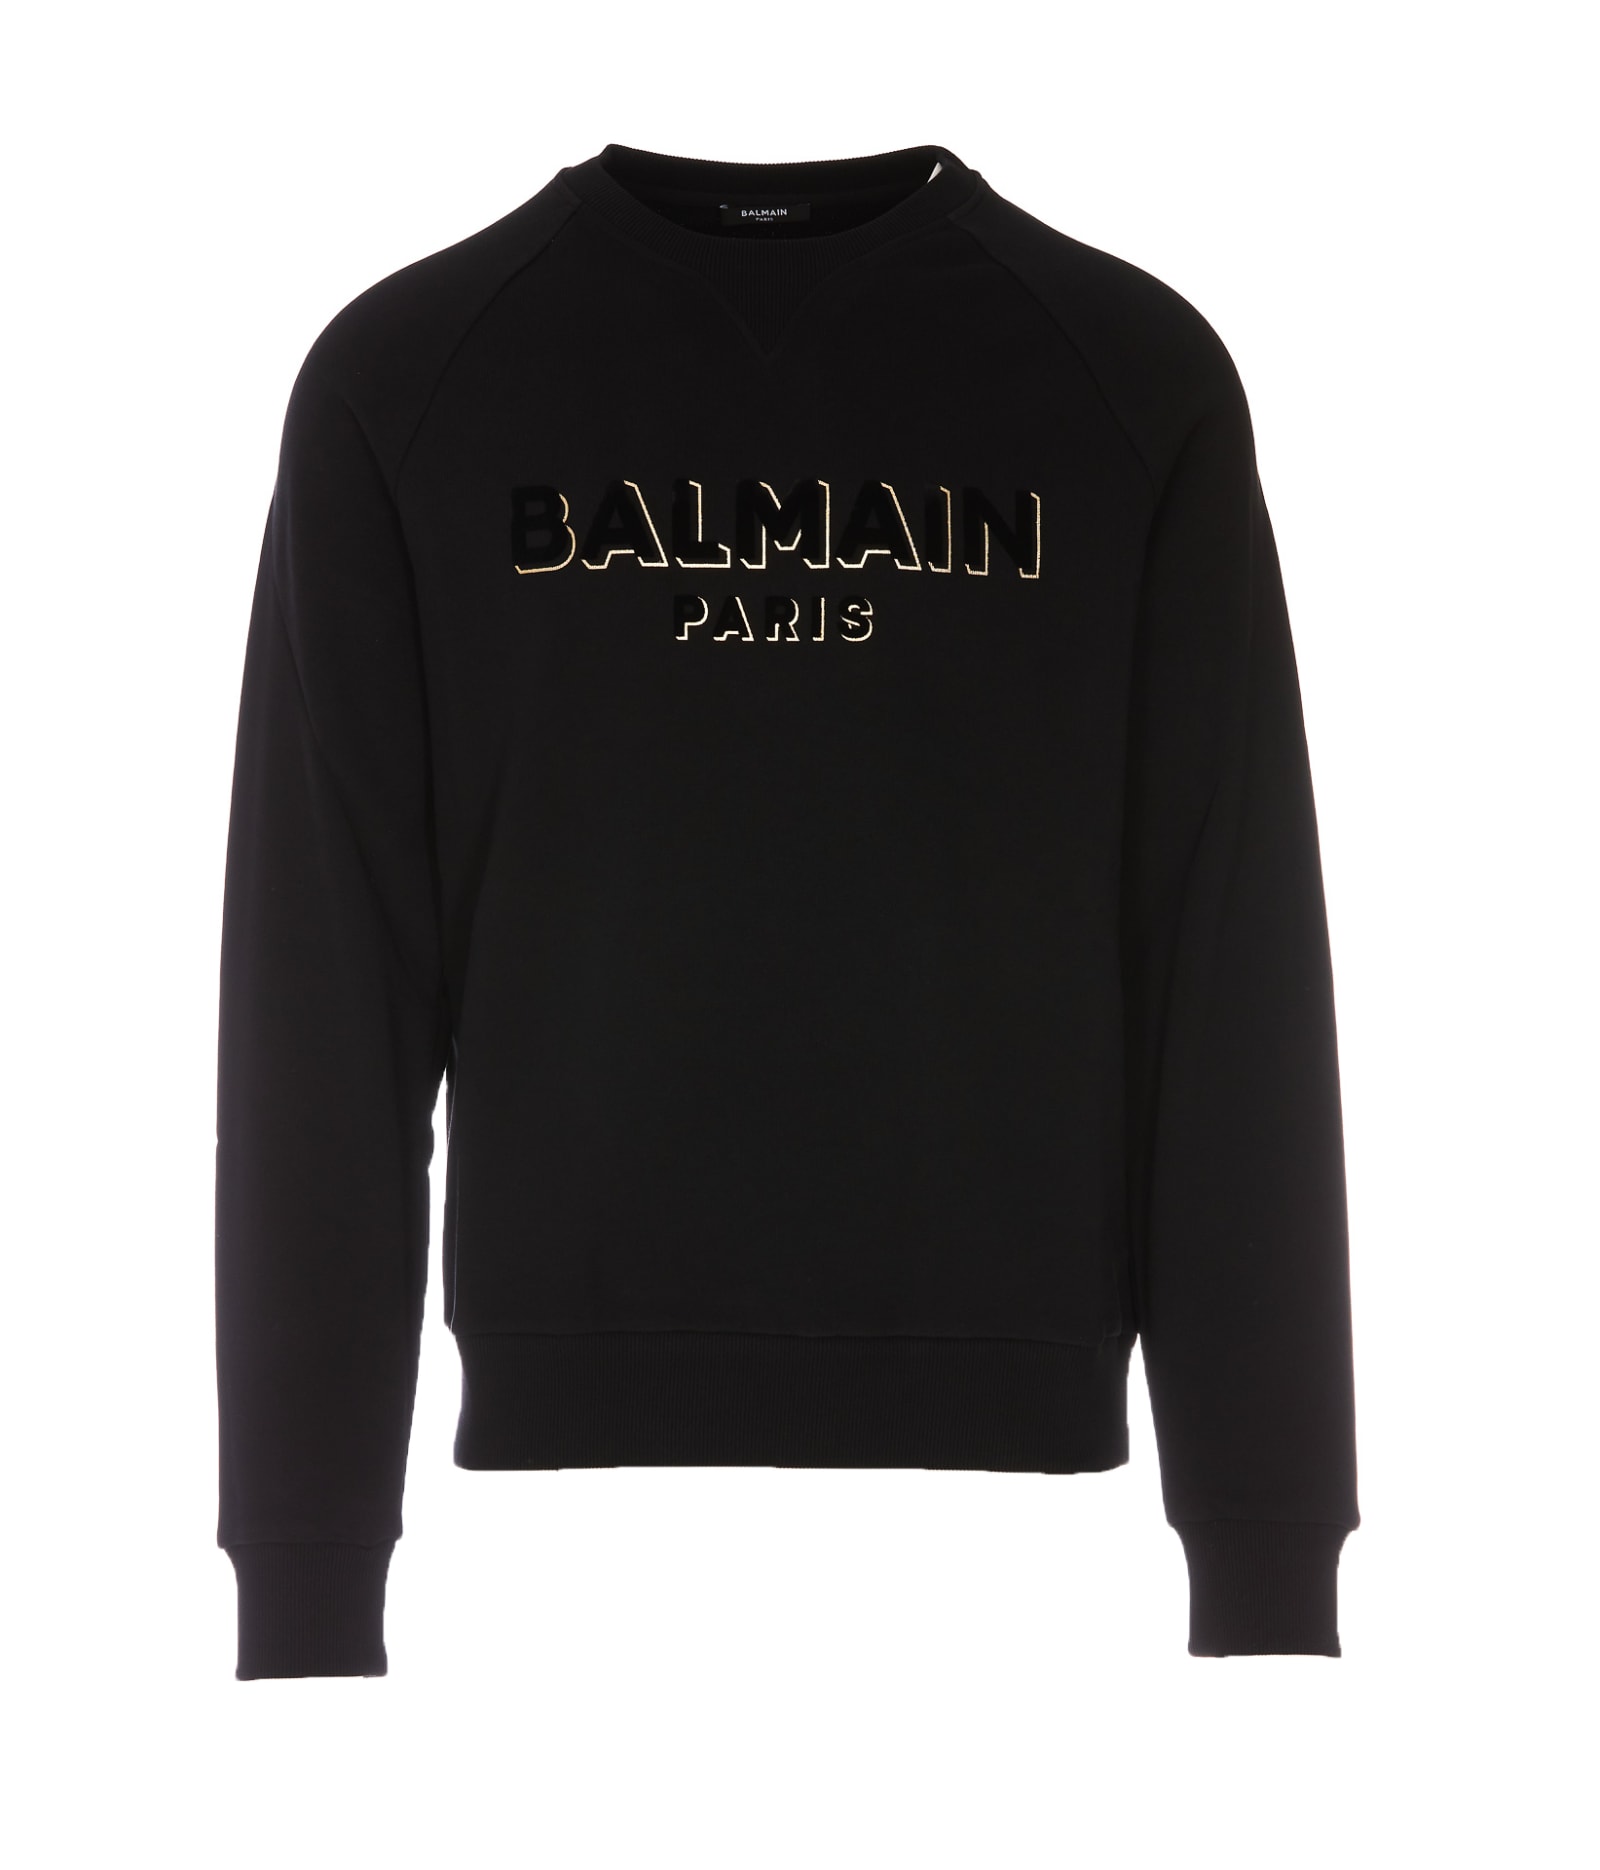 Texturized Balmain Logo Sweatshirt